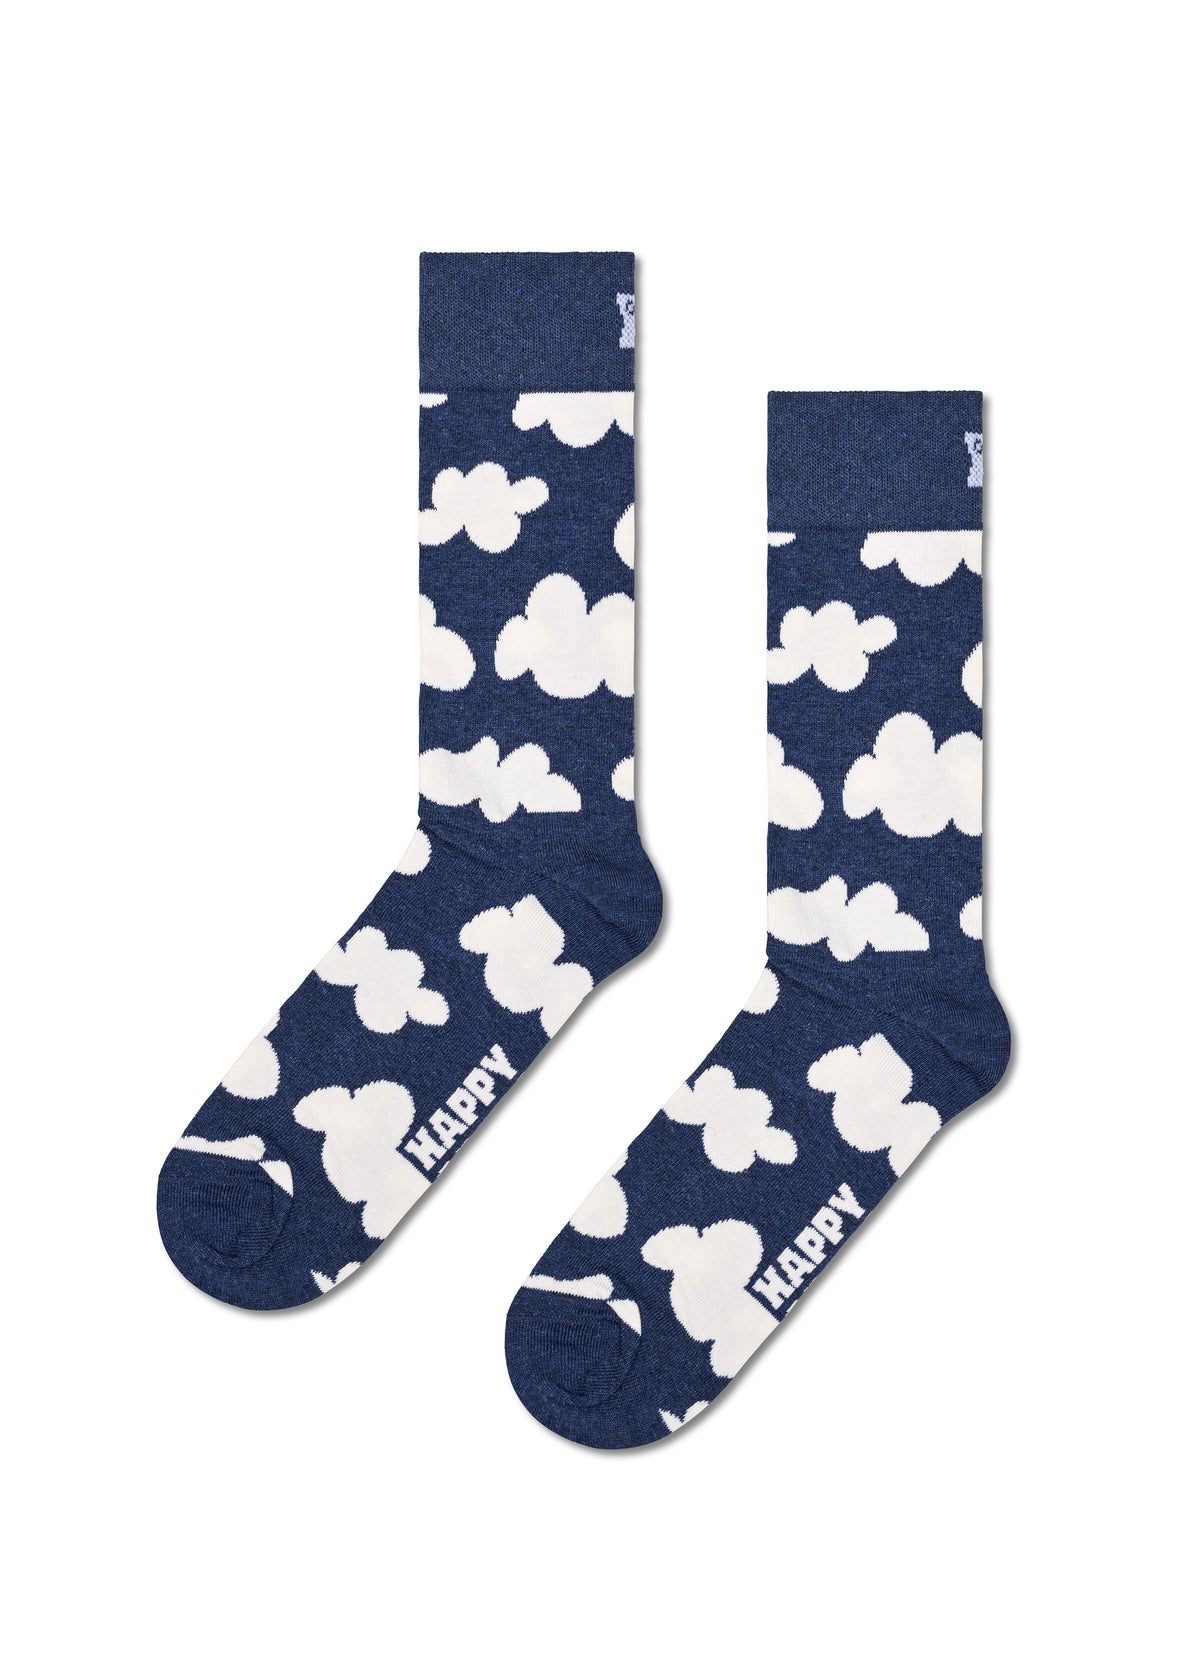 Adult socks - Cloudy Blue